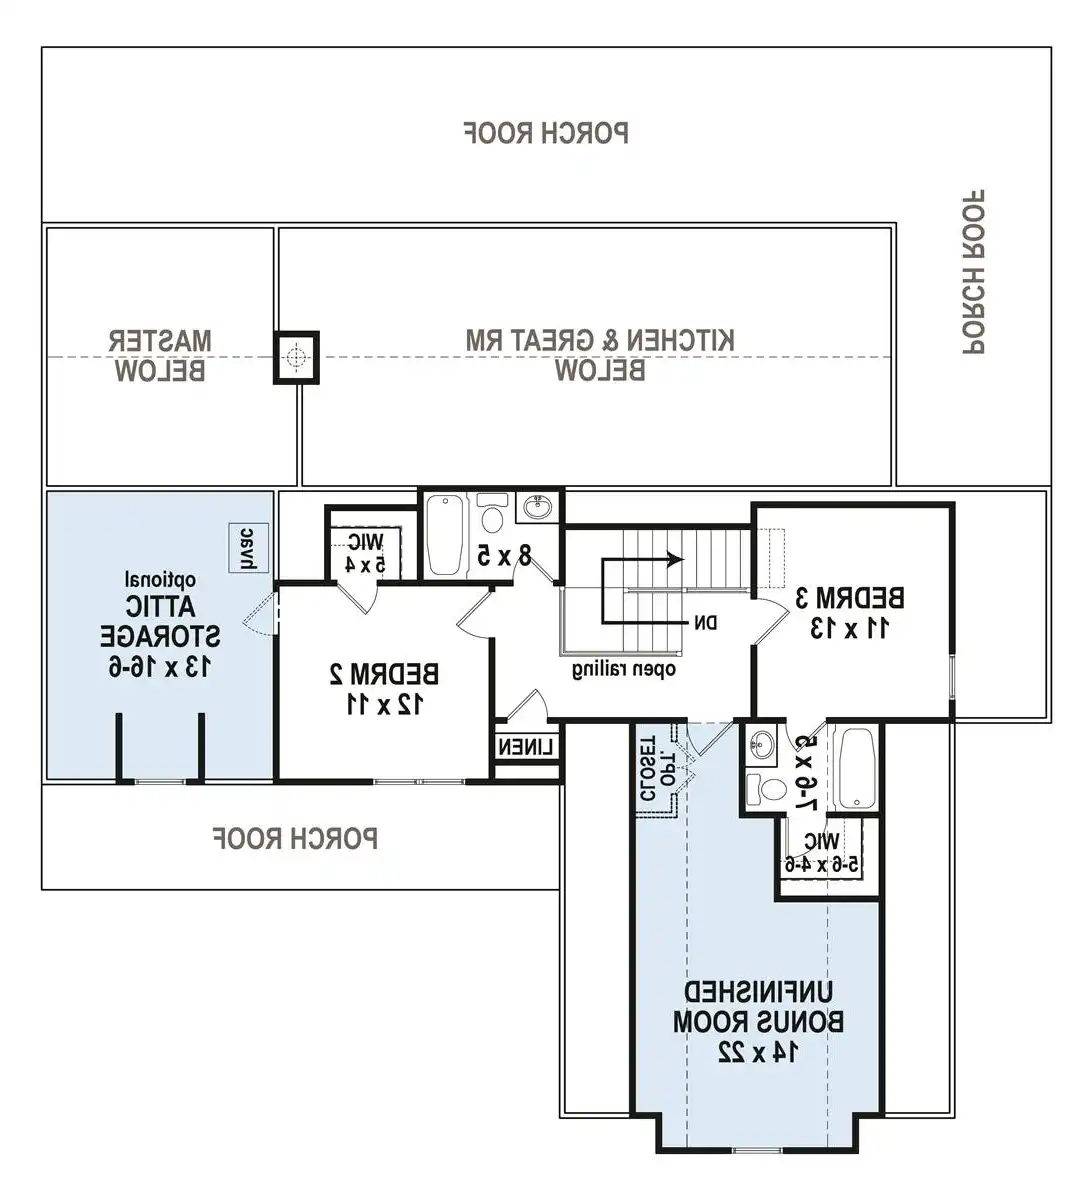 2nd Level Floor Plan